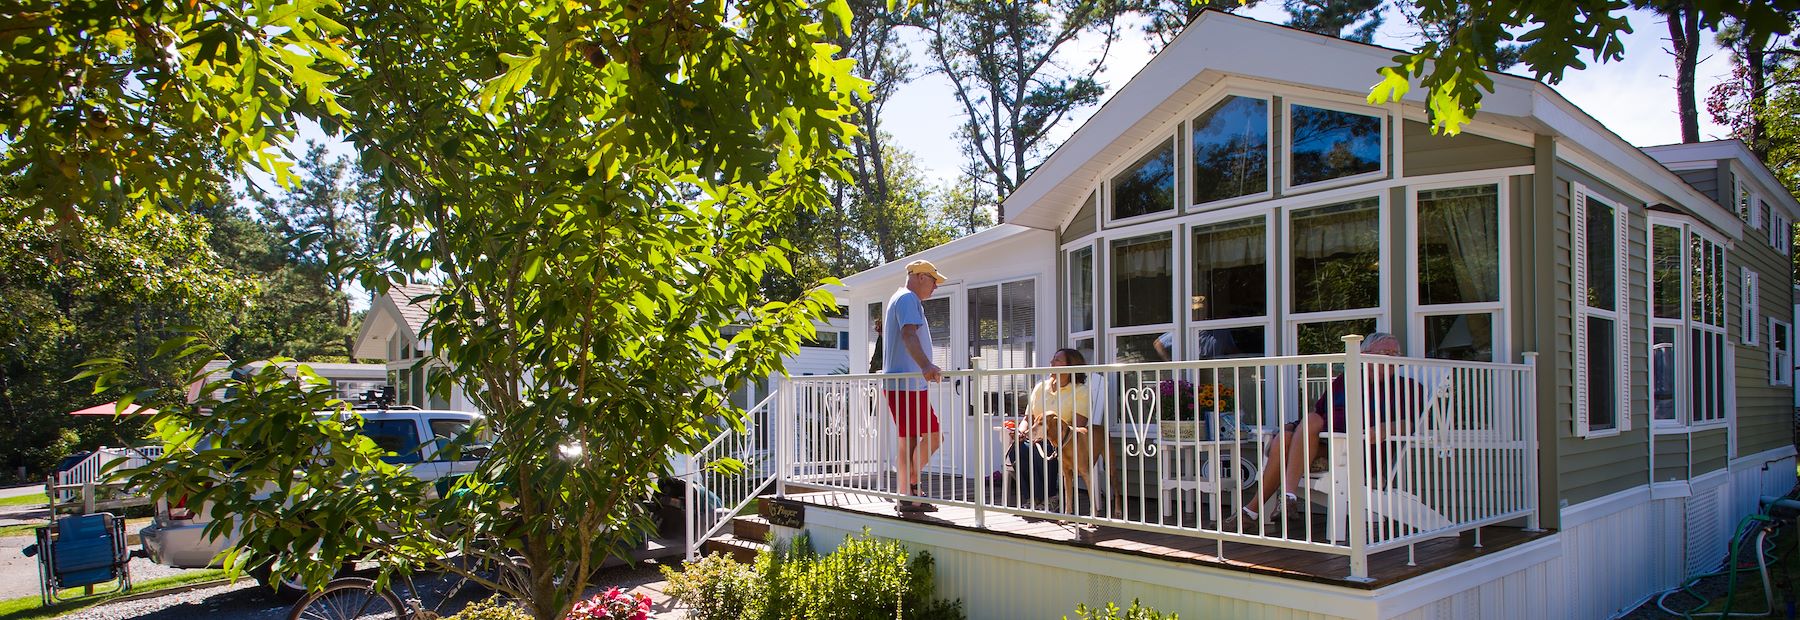 Sun Retreats Peters Pond Vacation Home Sales